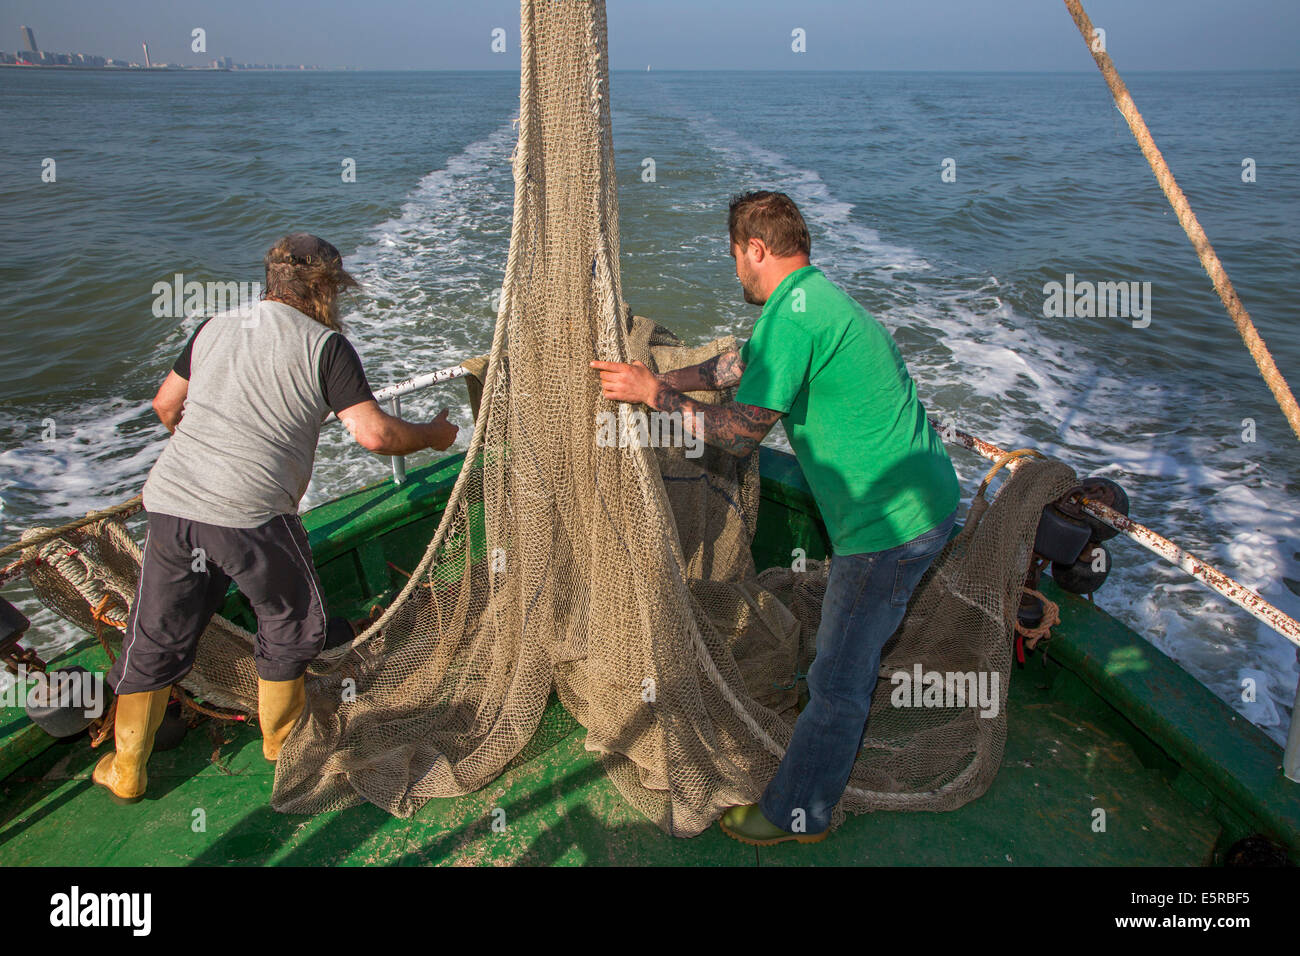 Fishermen preparing fish net on board of shrimp boat fishing for shrimps on the North Sea Stock Photo